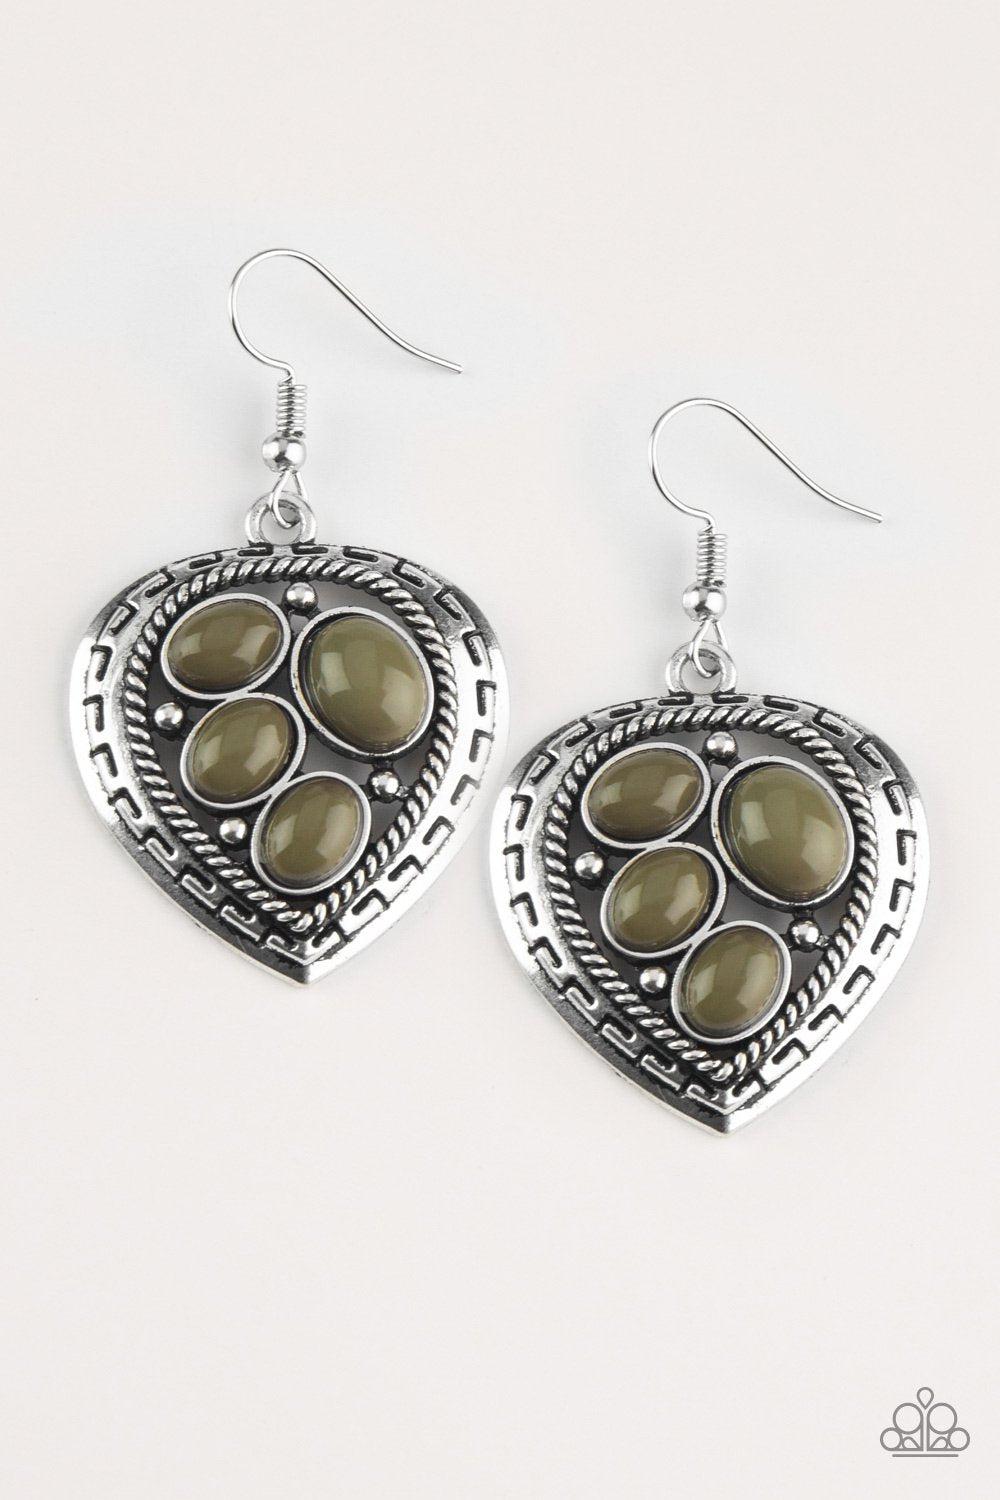 Wild Heart Wonder Green Earrings - Paparazzi Accessories-CarasShop.com - $5 Jewelry by Cara Jewels